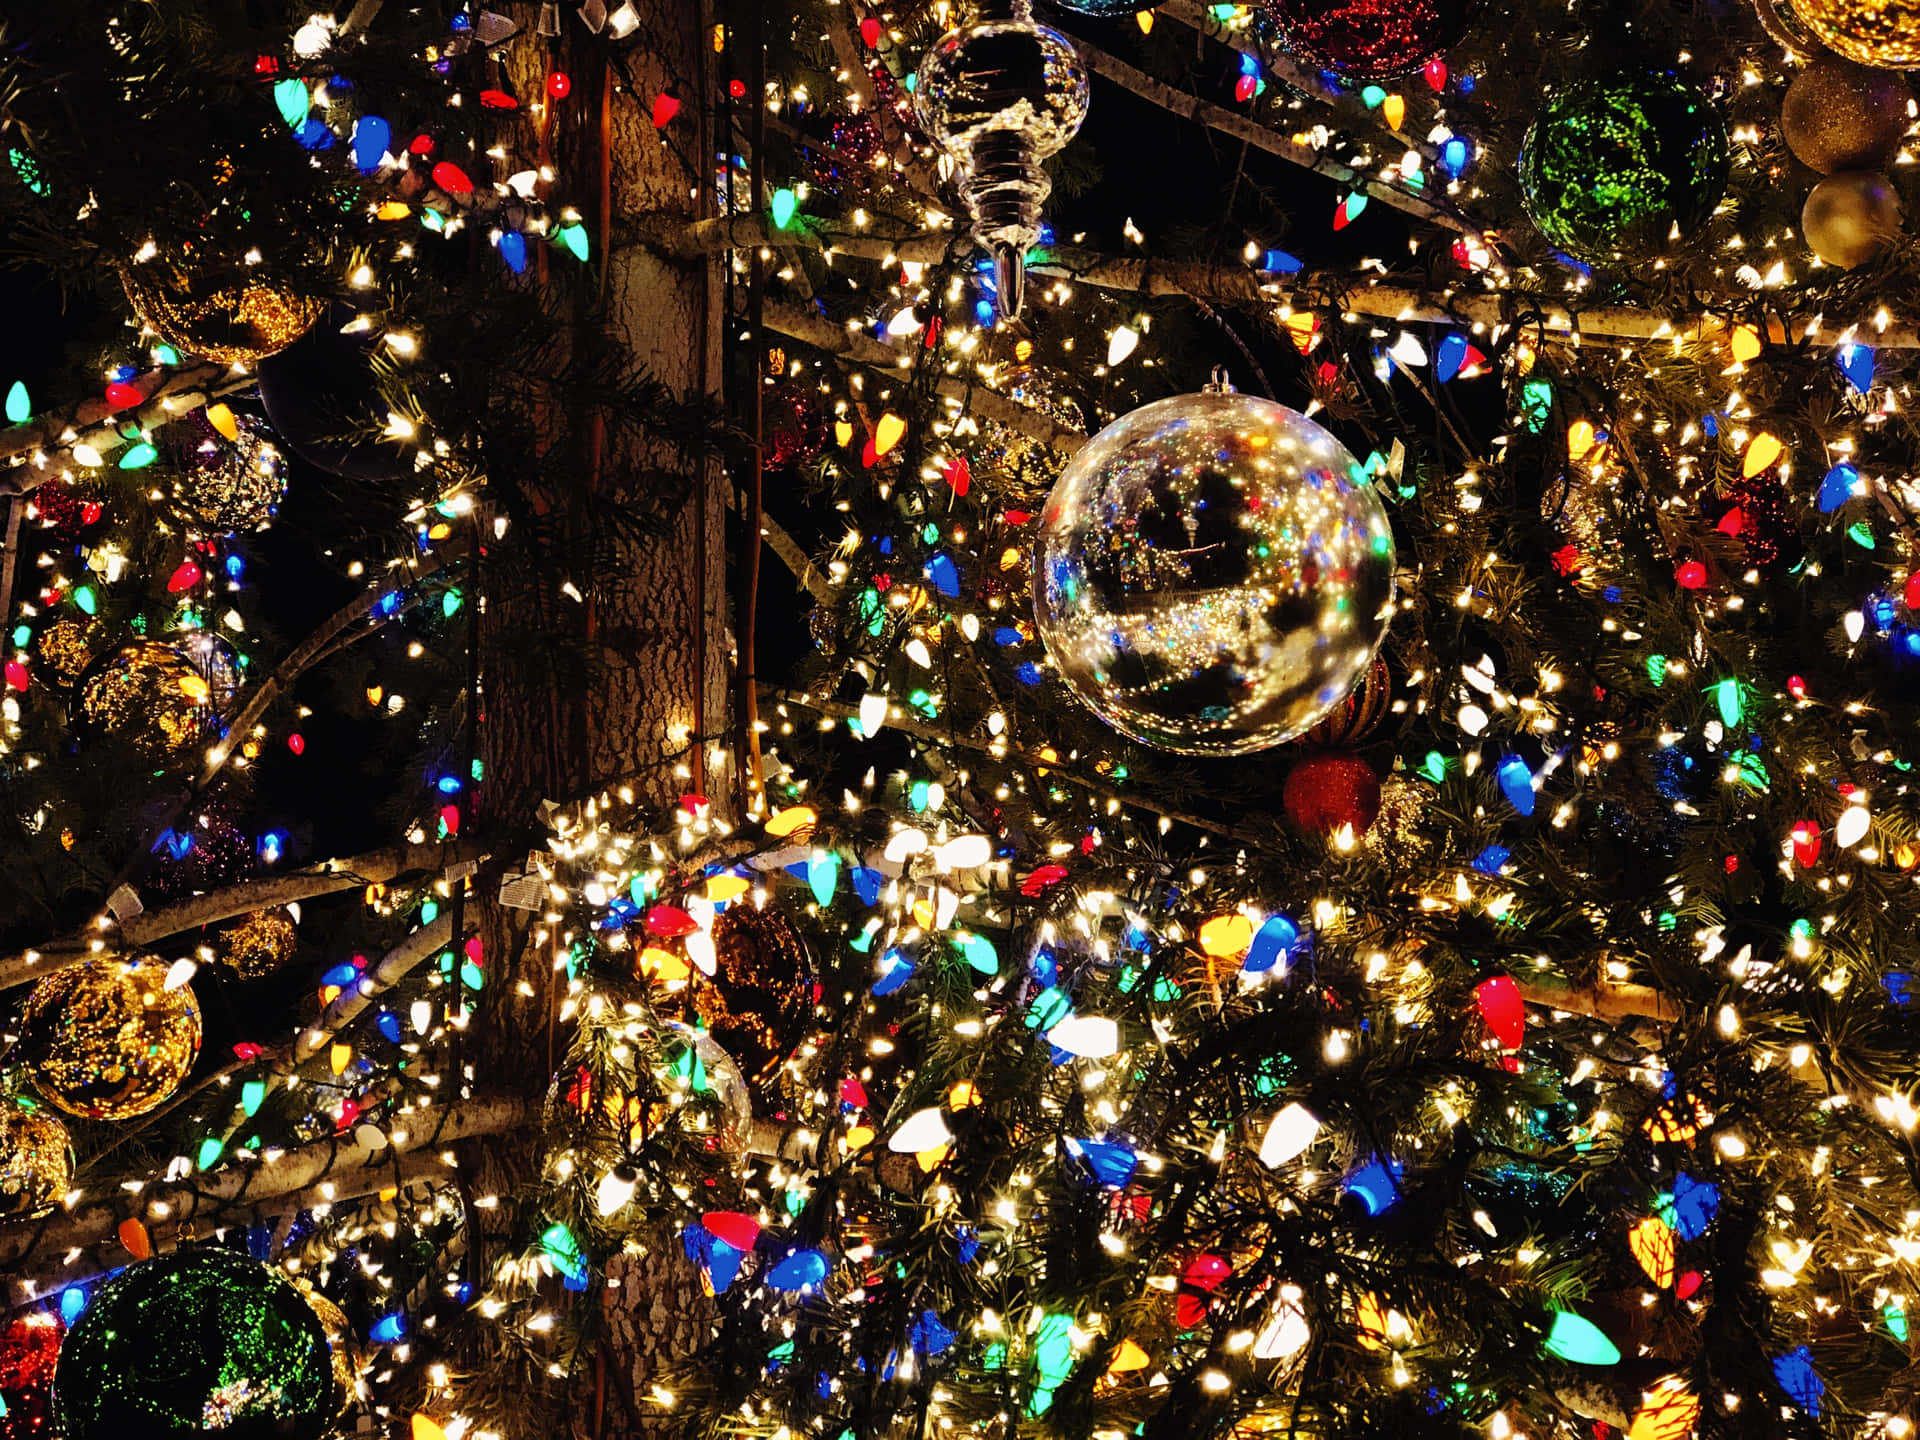 Illuminate the Holiday Season with Magical Christmas Lights